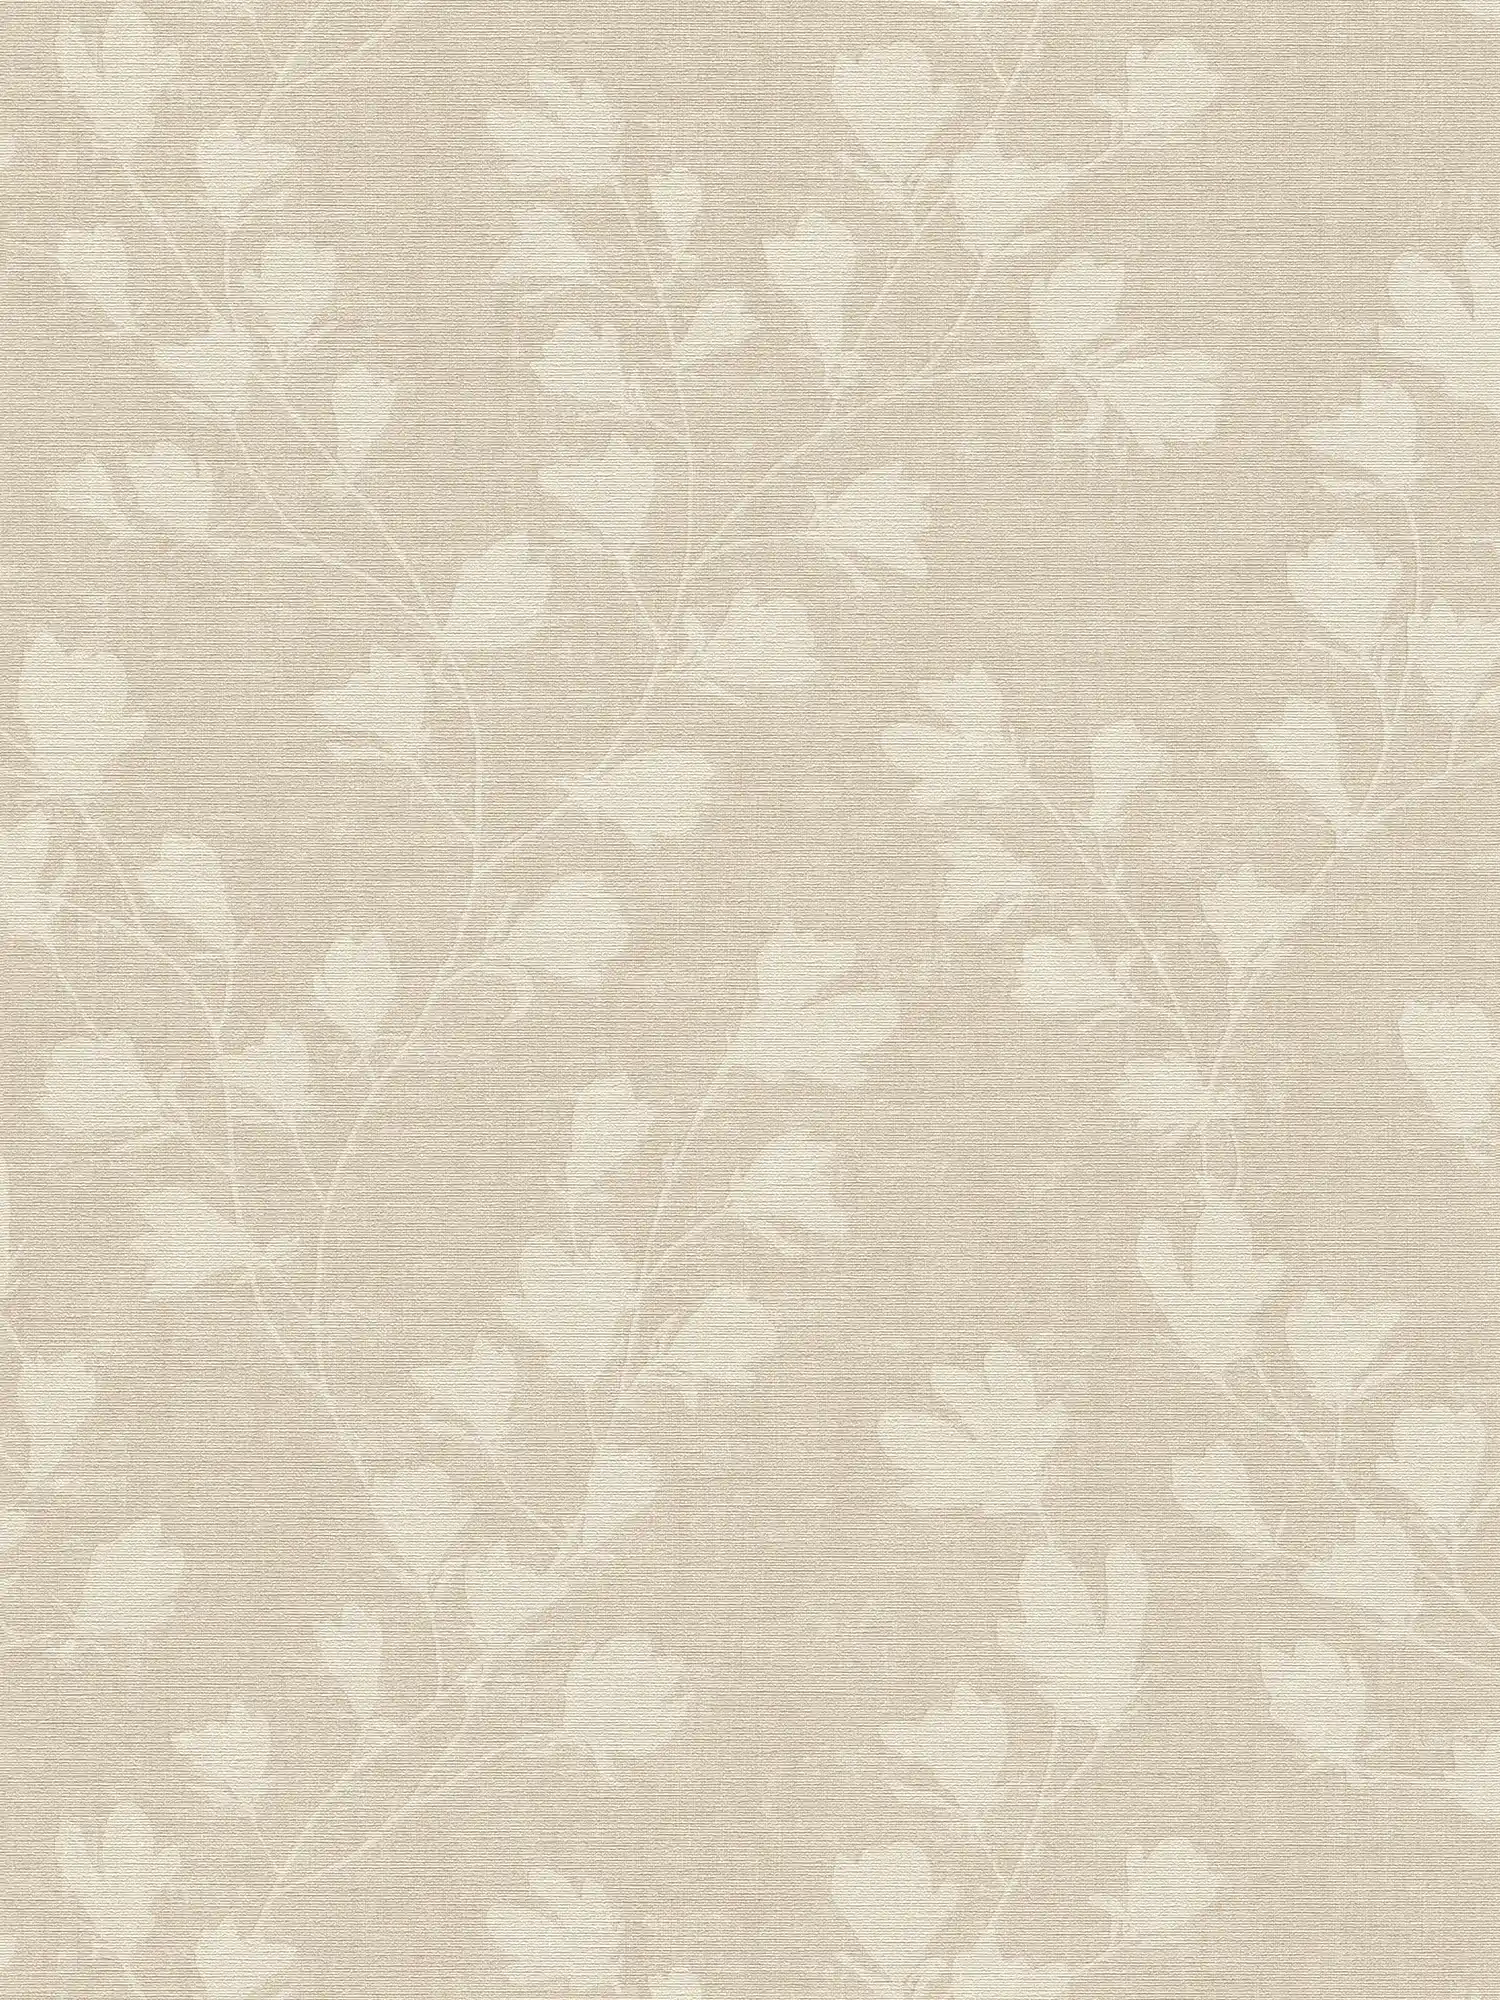 Beige wallpaper with natural leaf pattern
